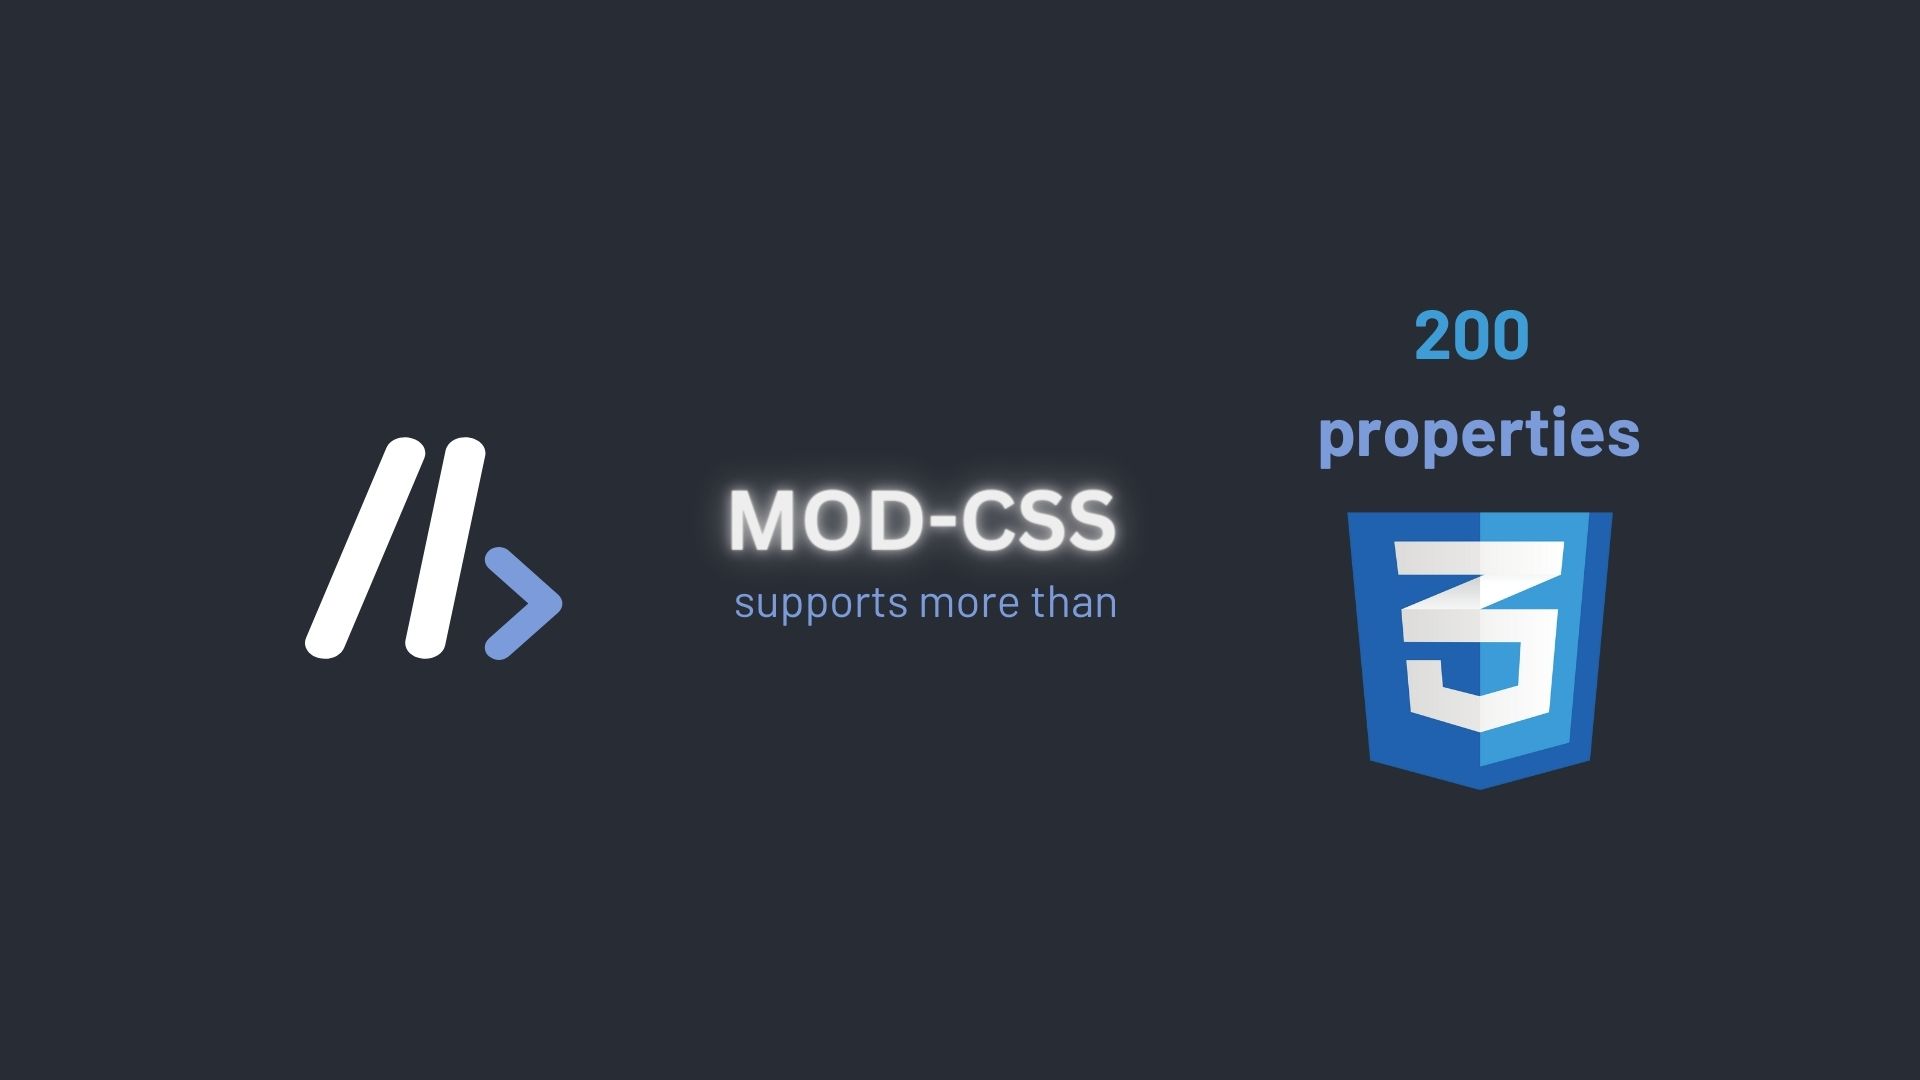 mod-css_more-than-200-properties